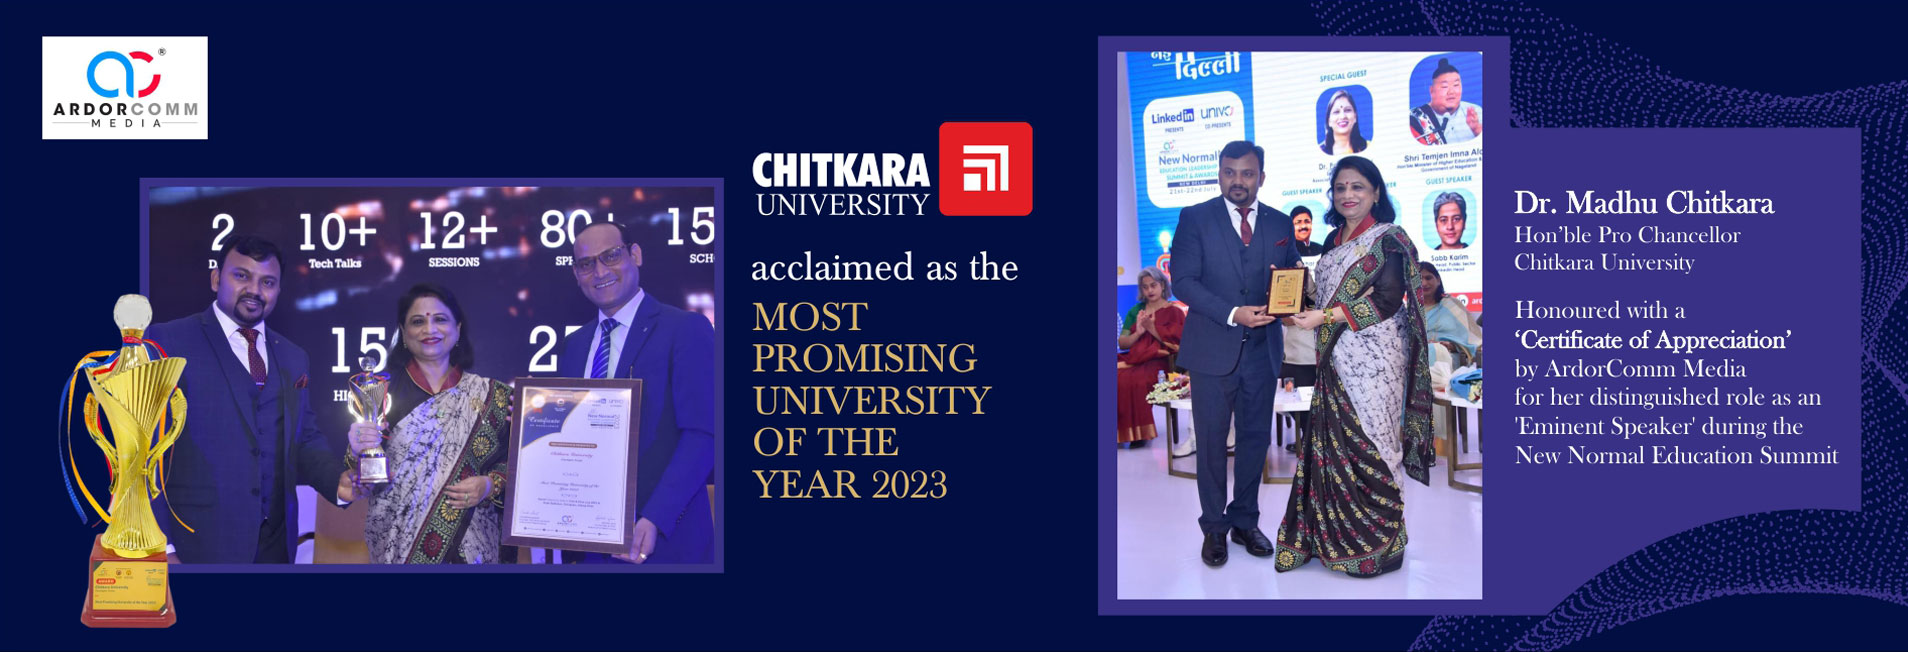 Most Promising University - Chitkara University